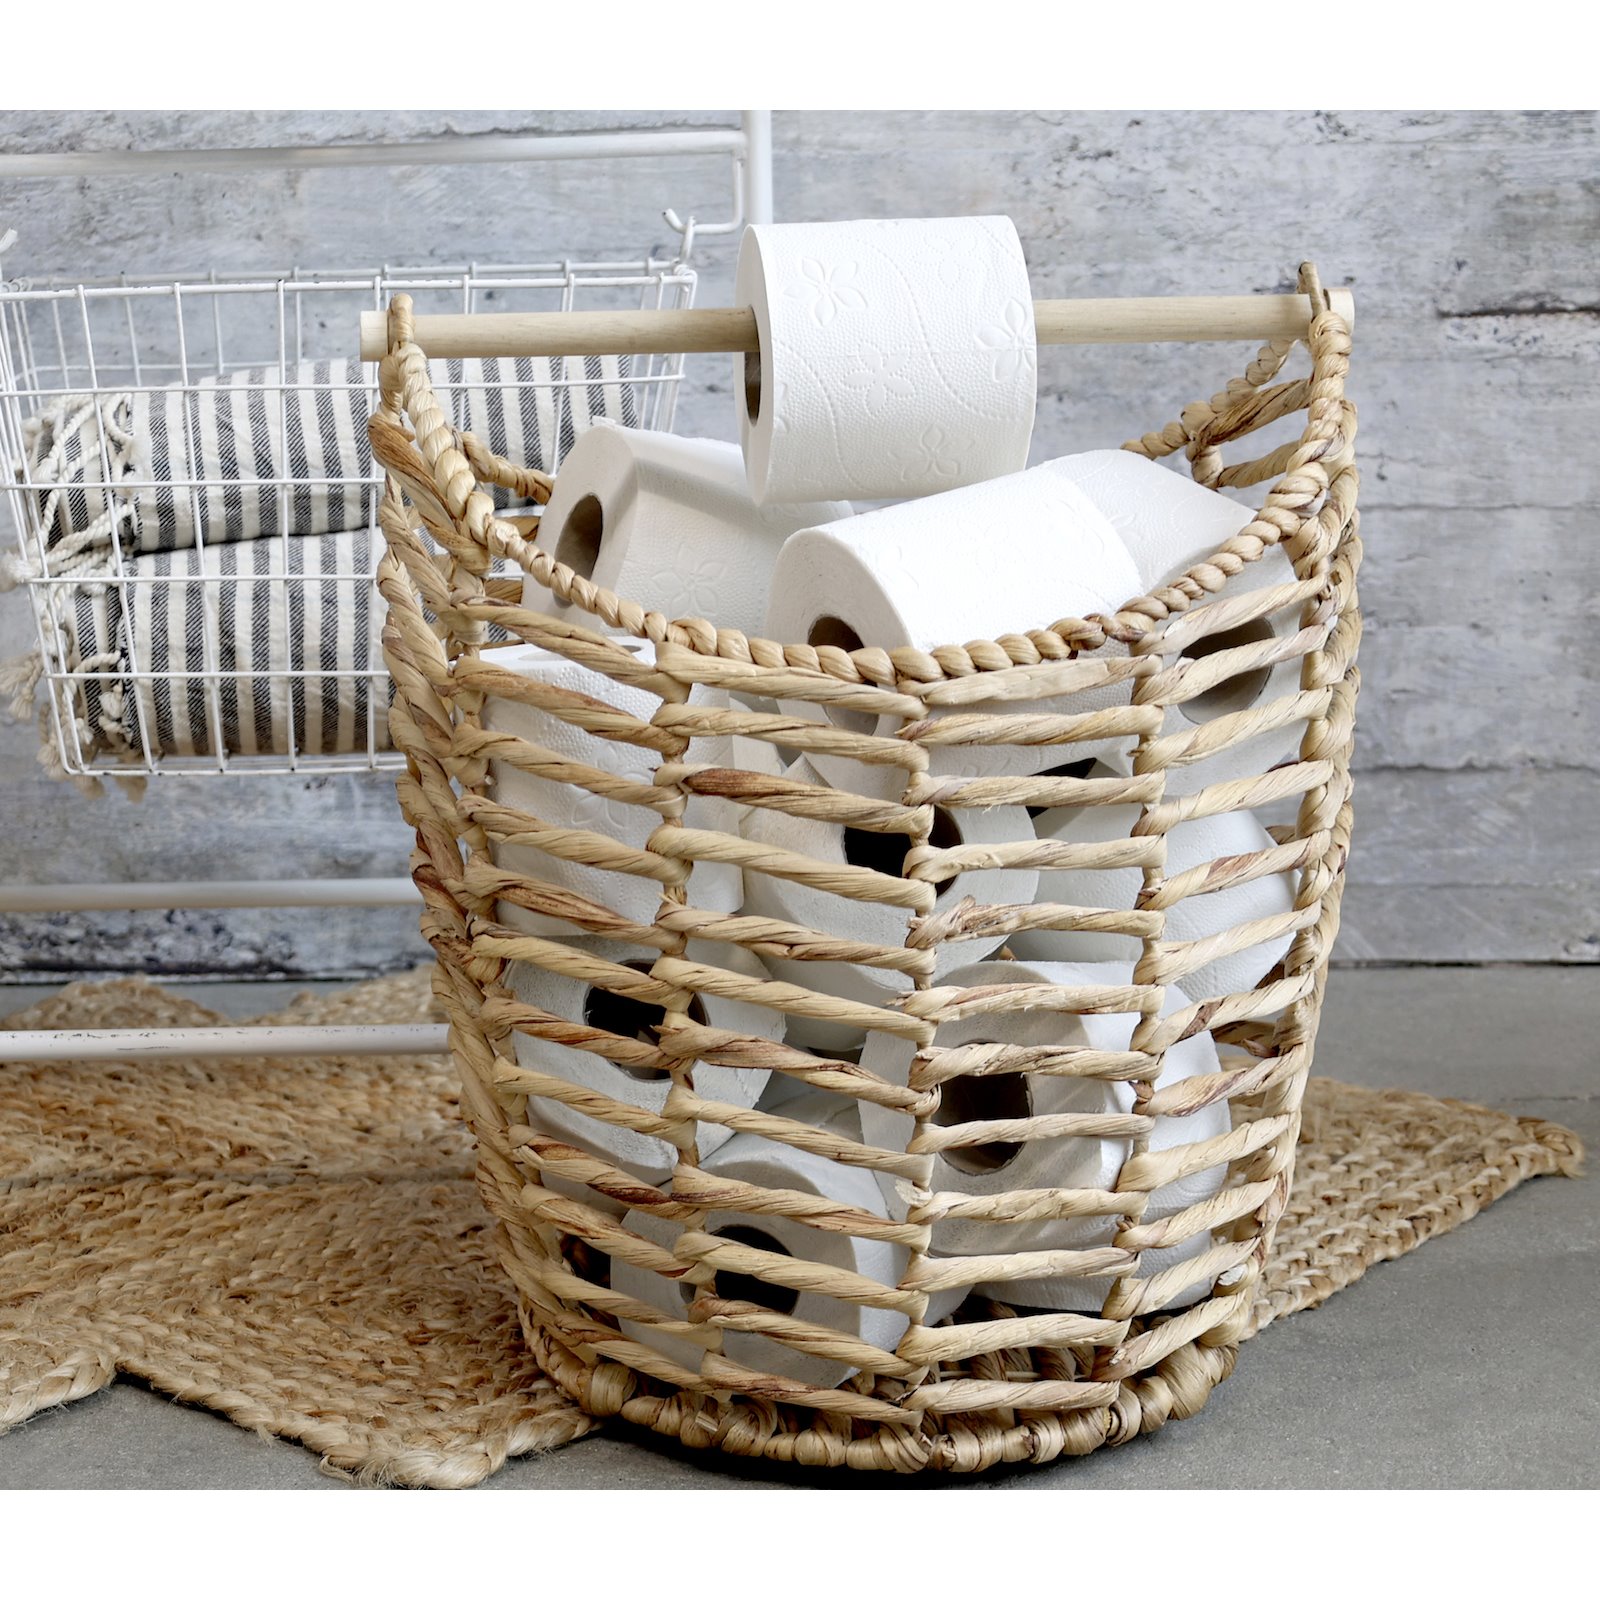 Large Basket with Toilet Roll holder - Natural Image